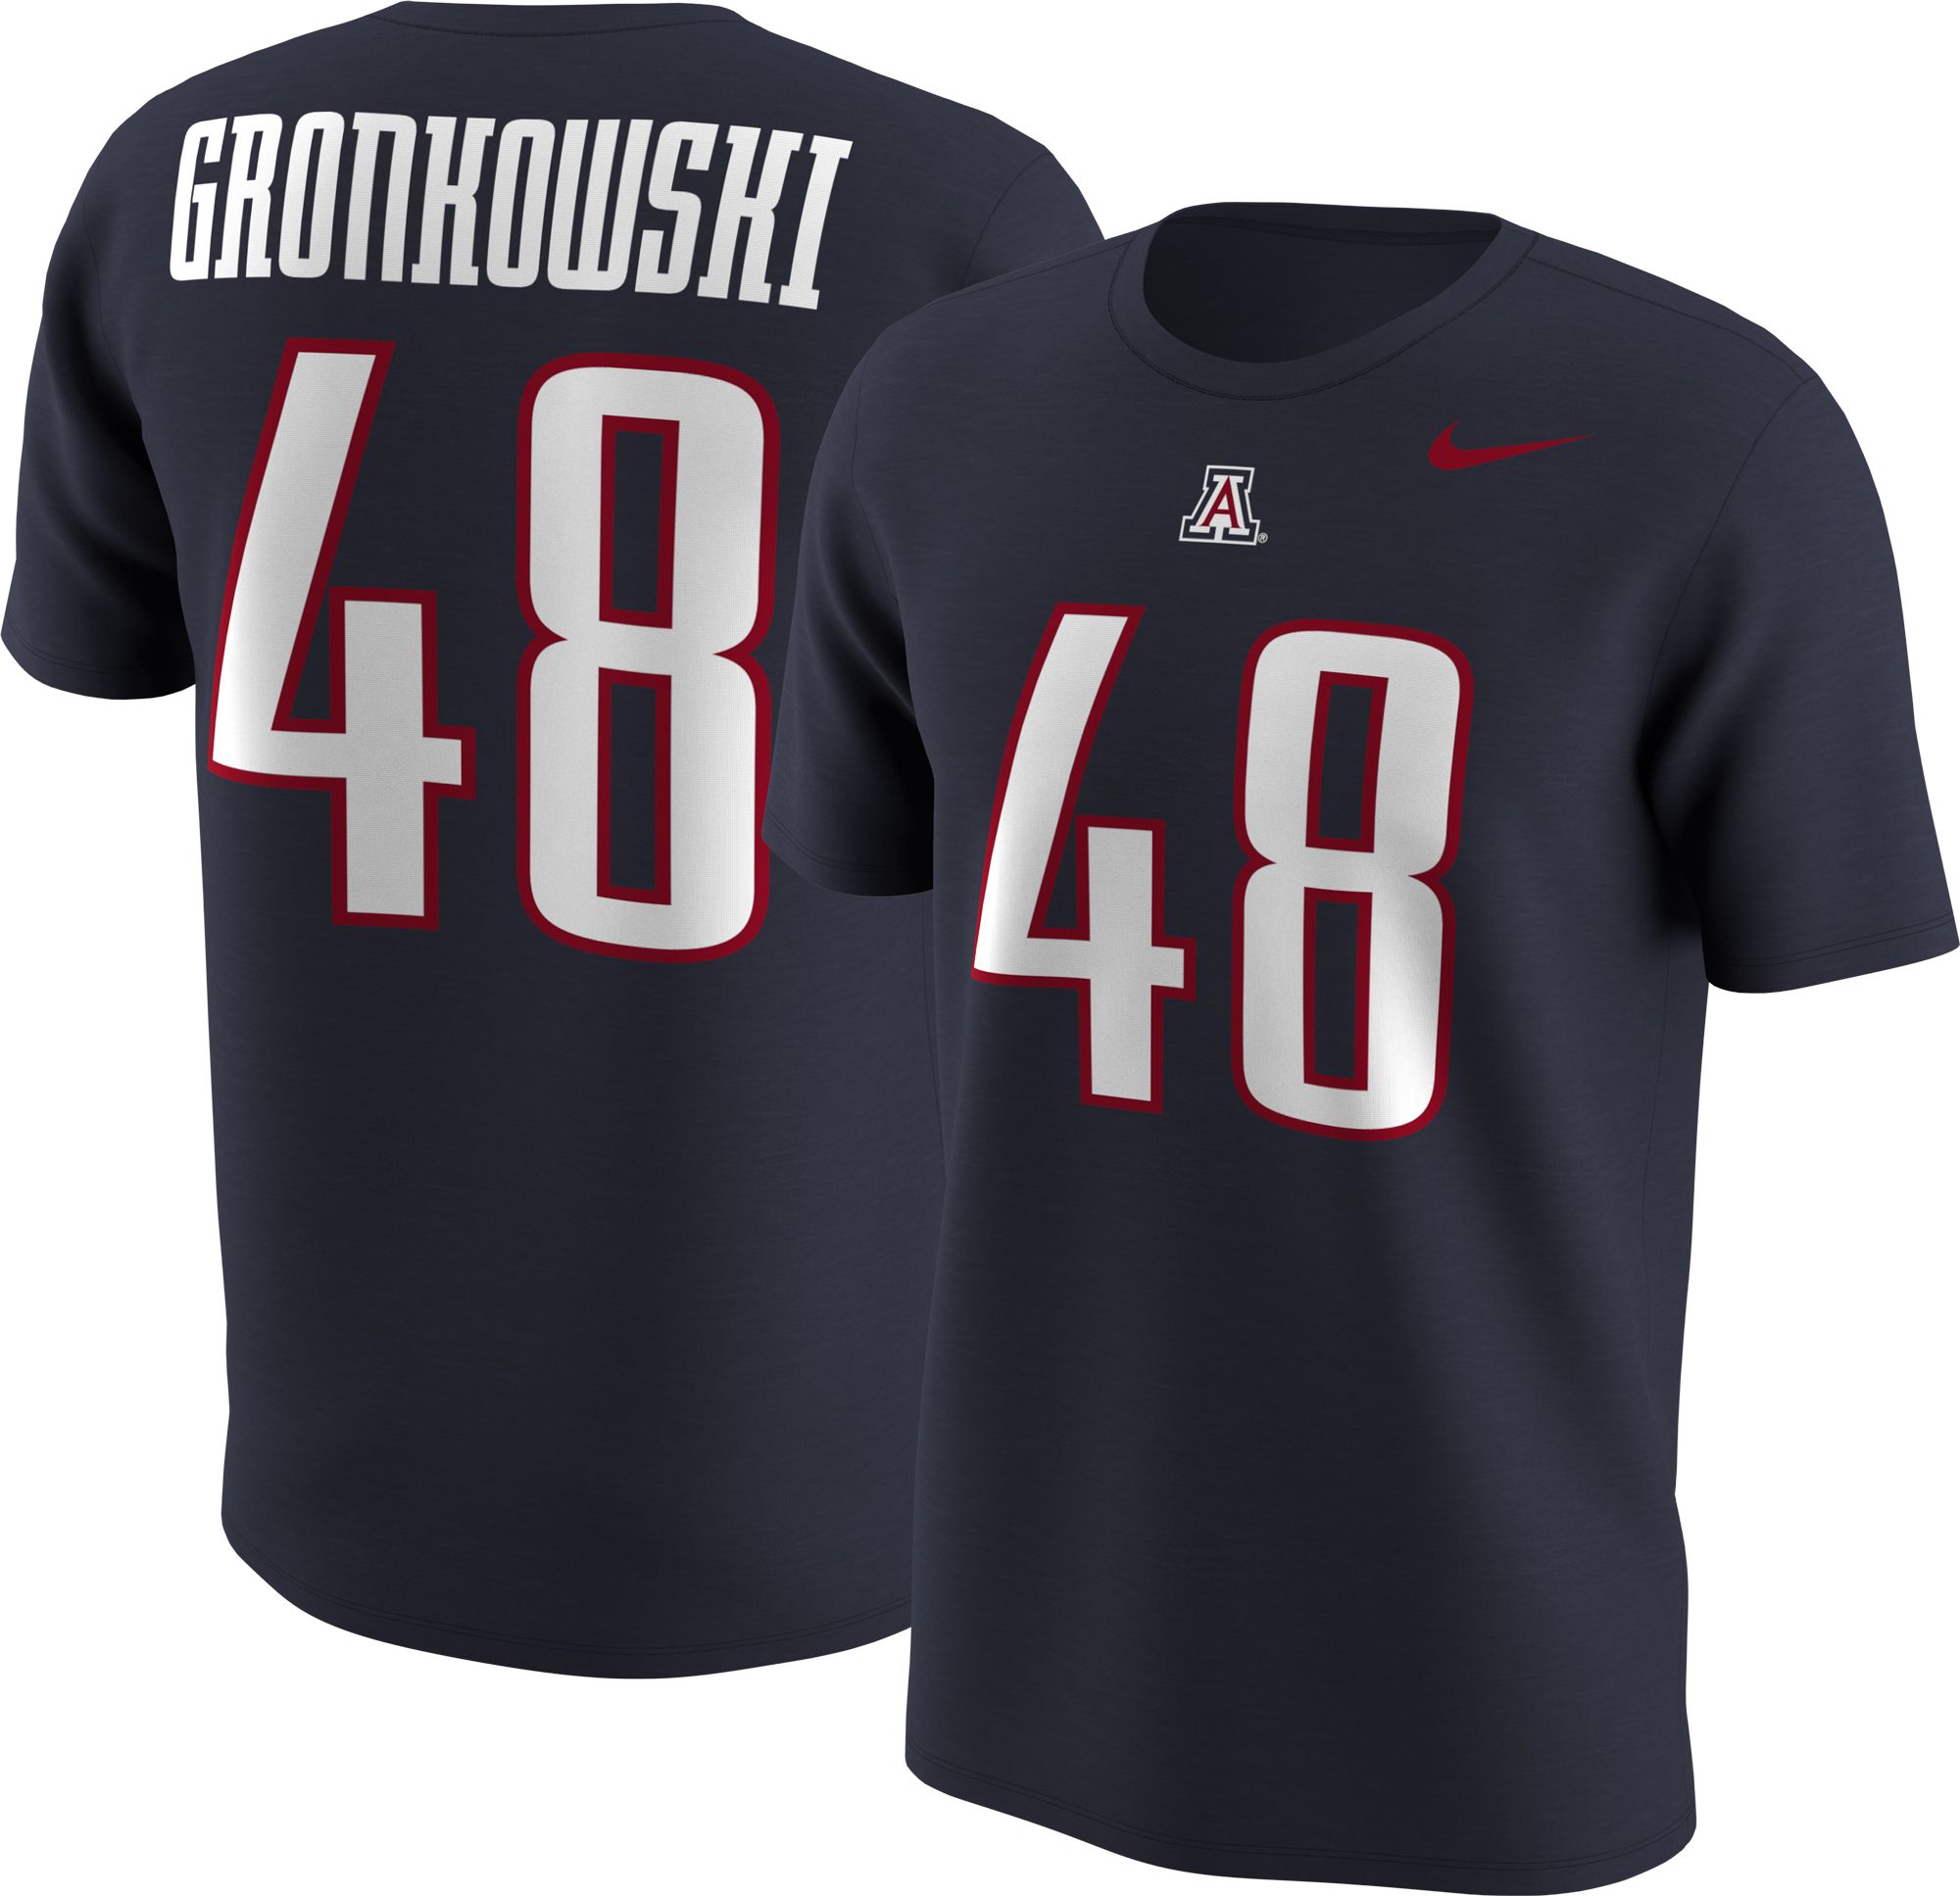 rob gronkowski jersey t shirt